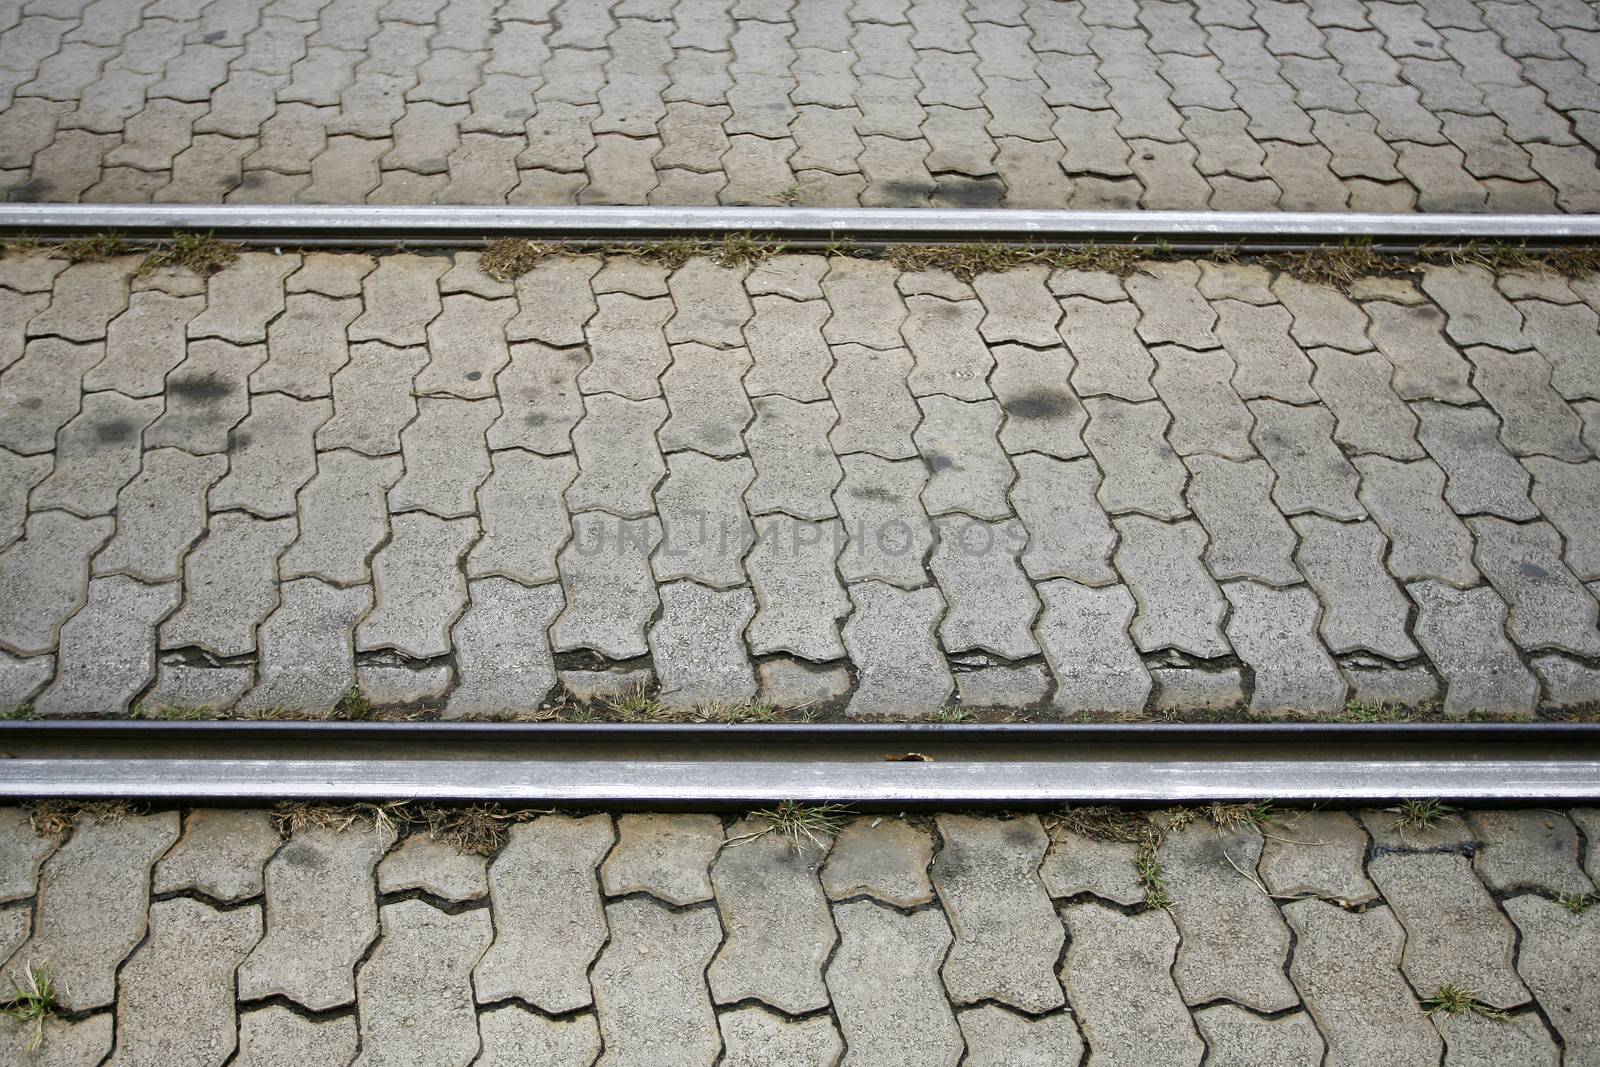 Tram Railway track in a sity